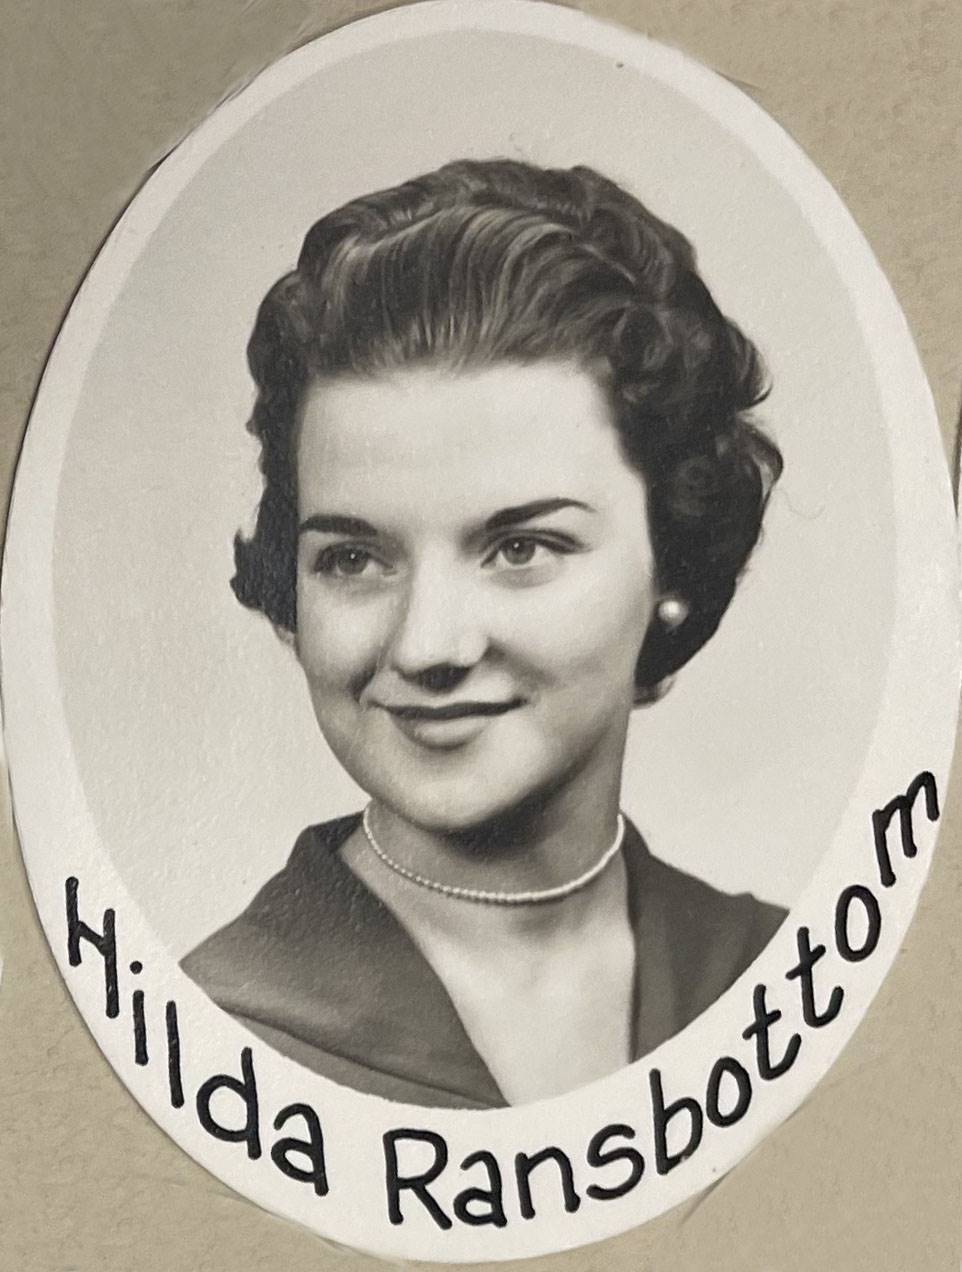 Hilda Ransbottom